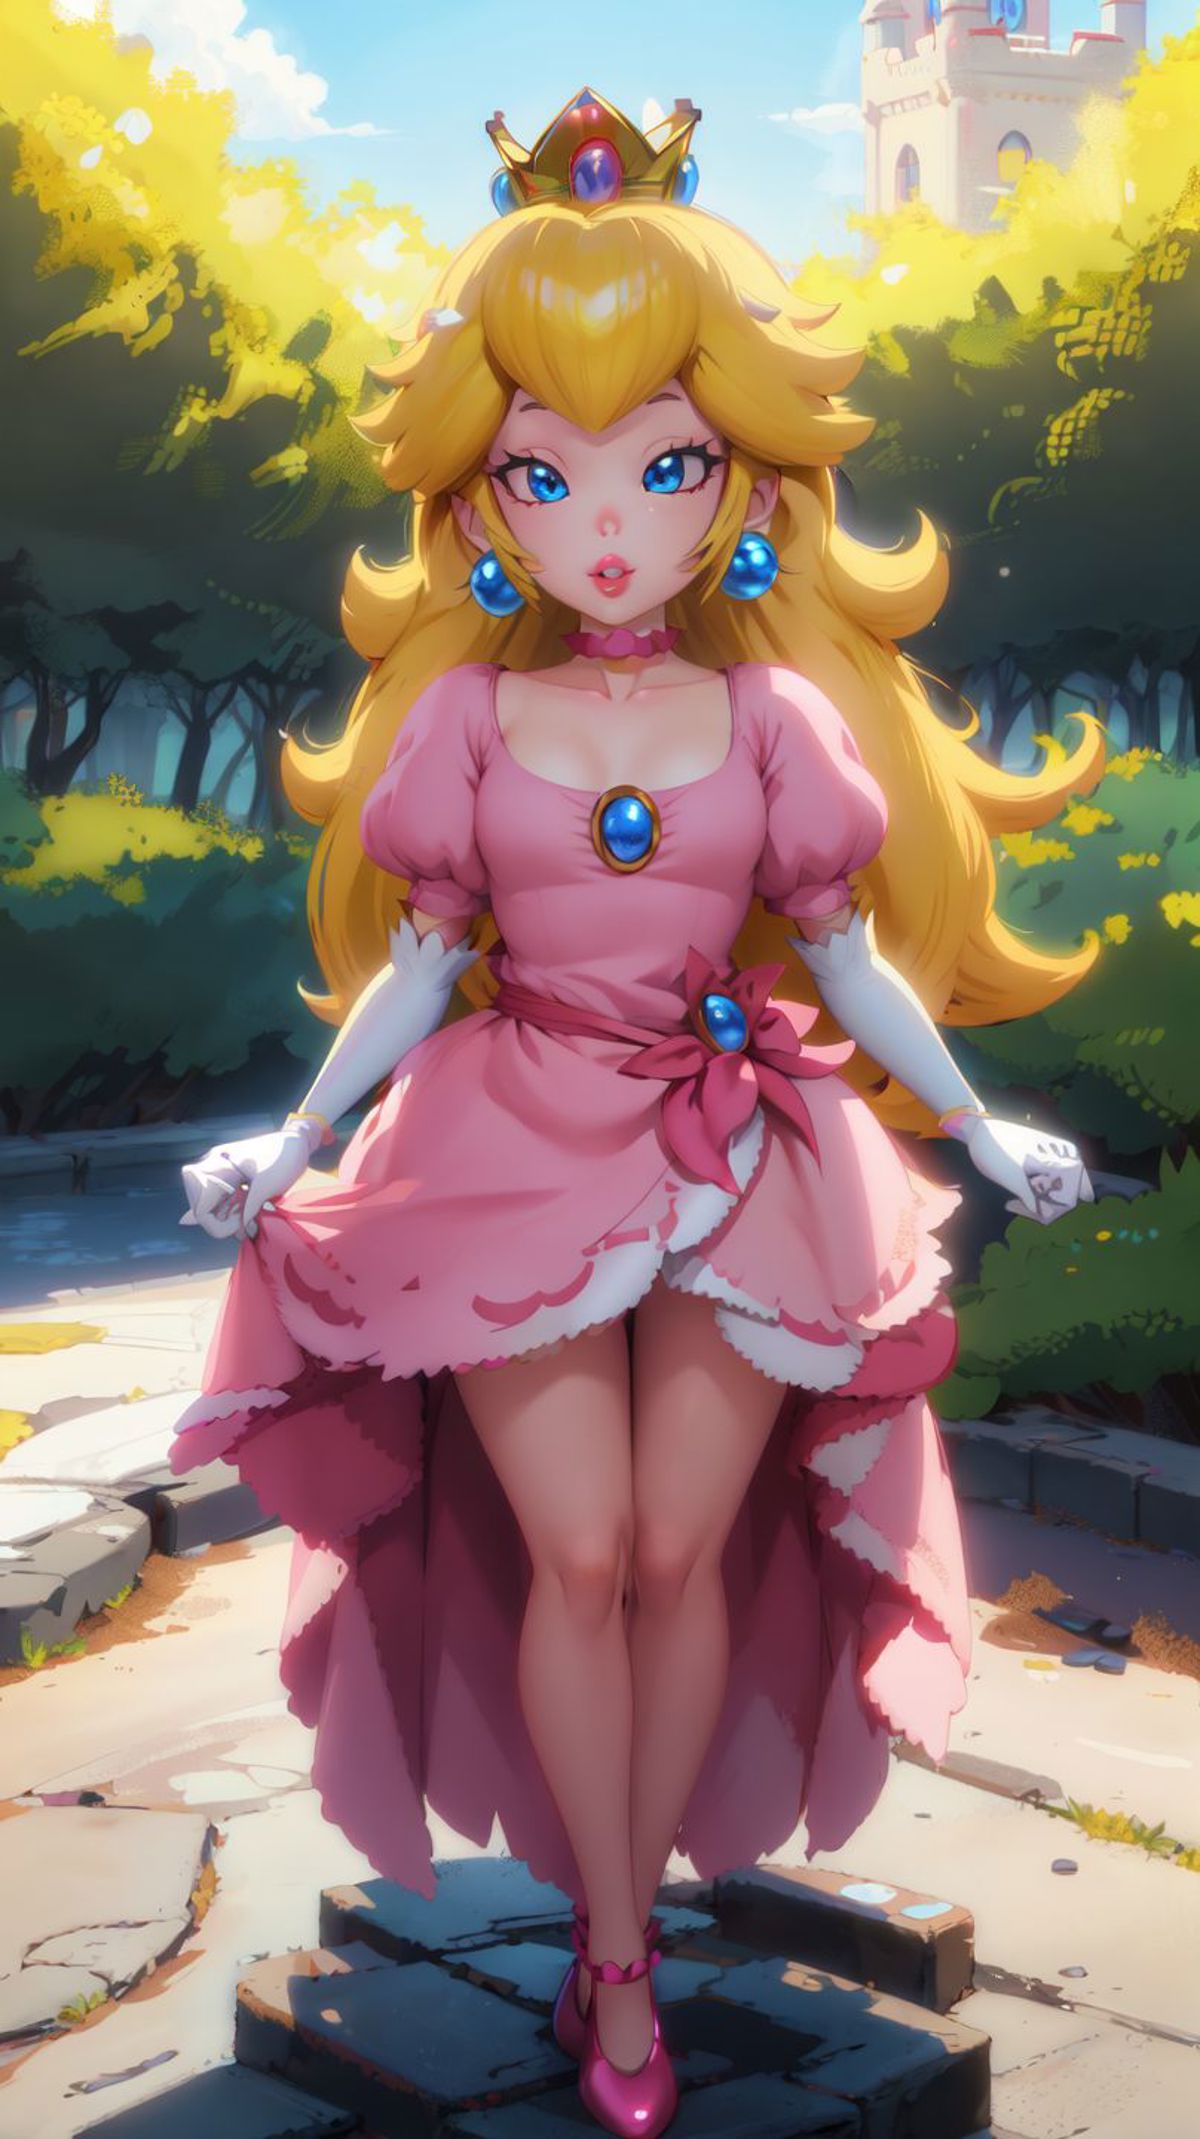 Princess Peach image by marusame